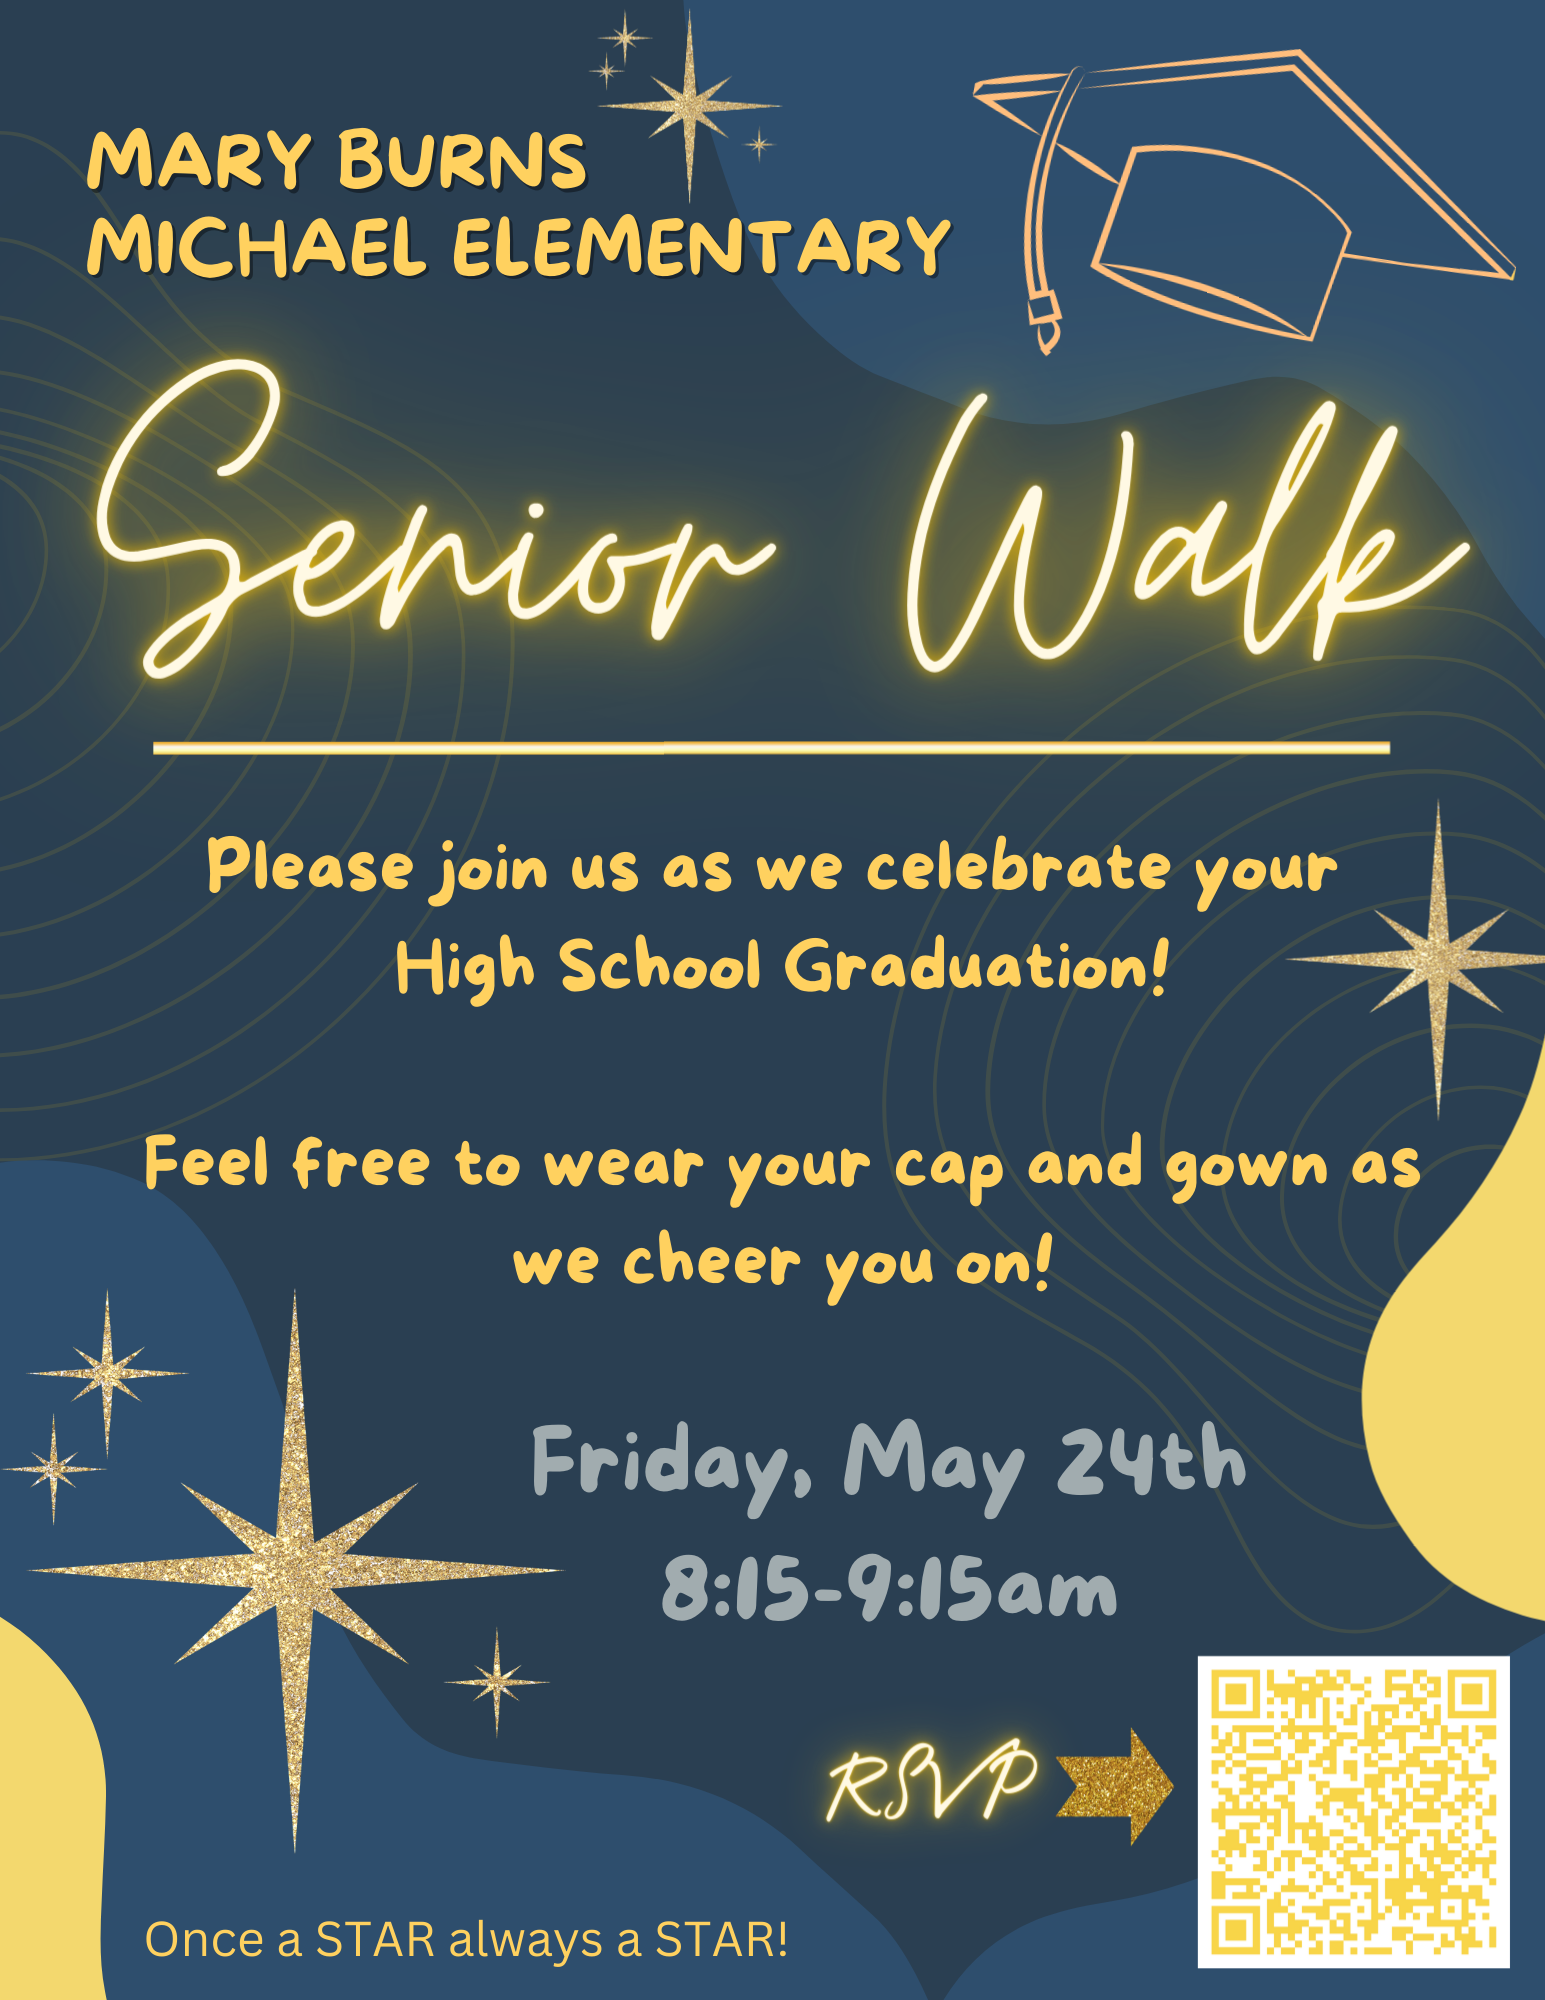 Senior Walk-Michael